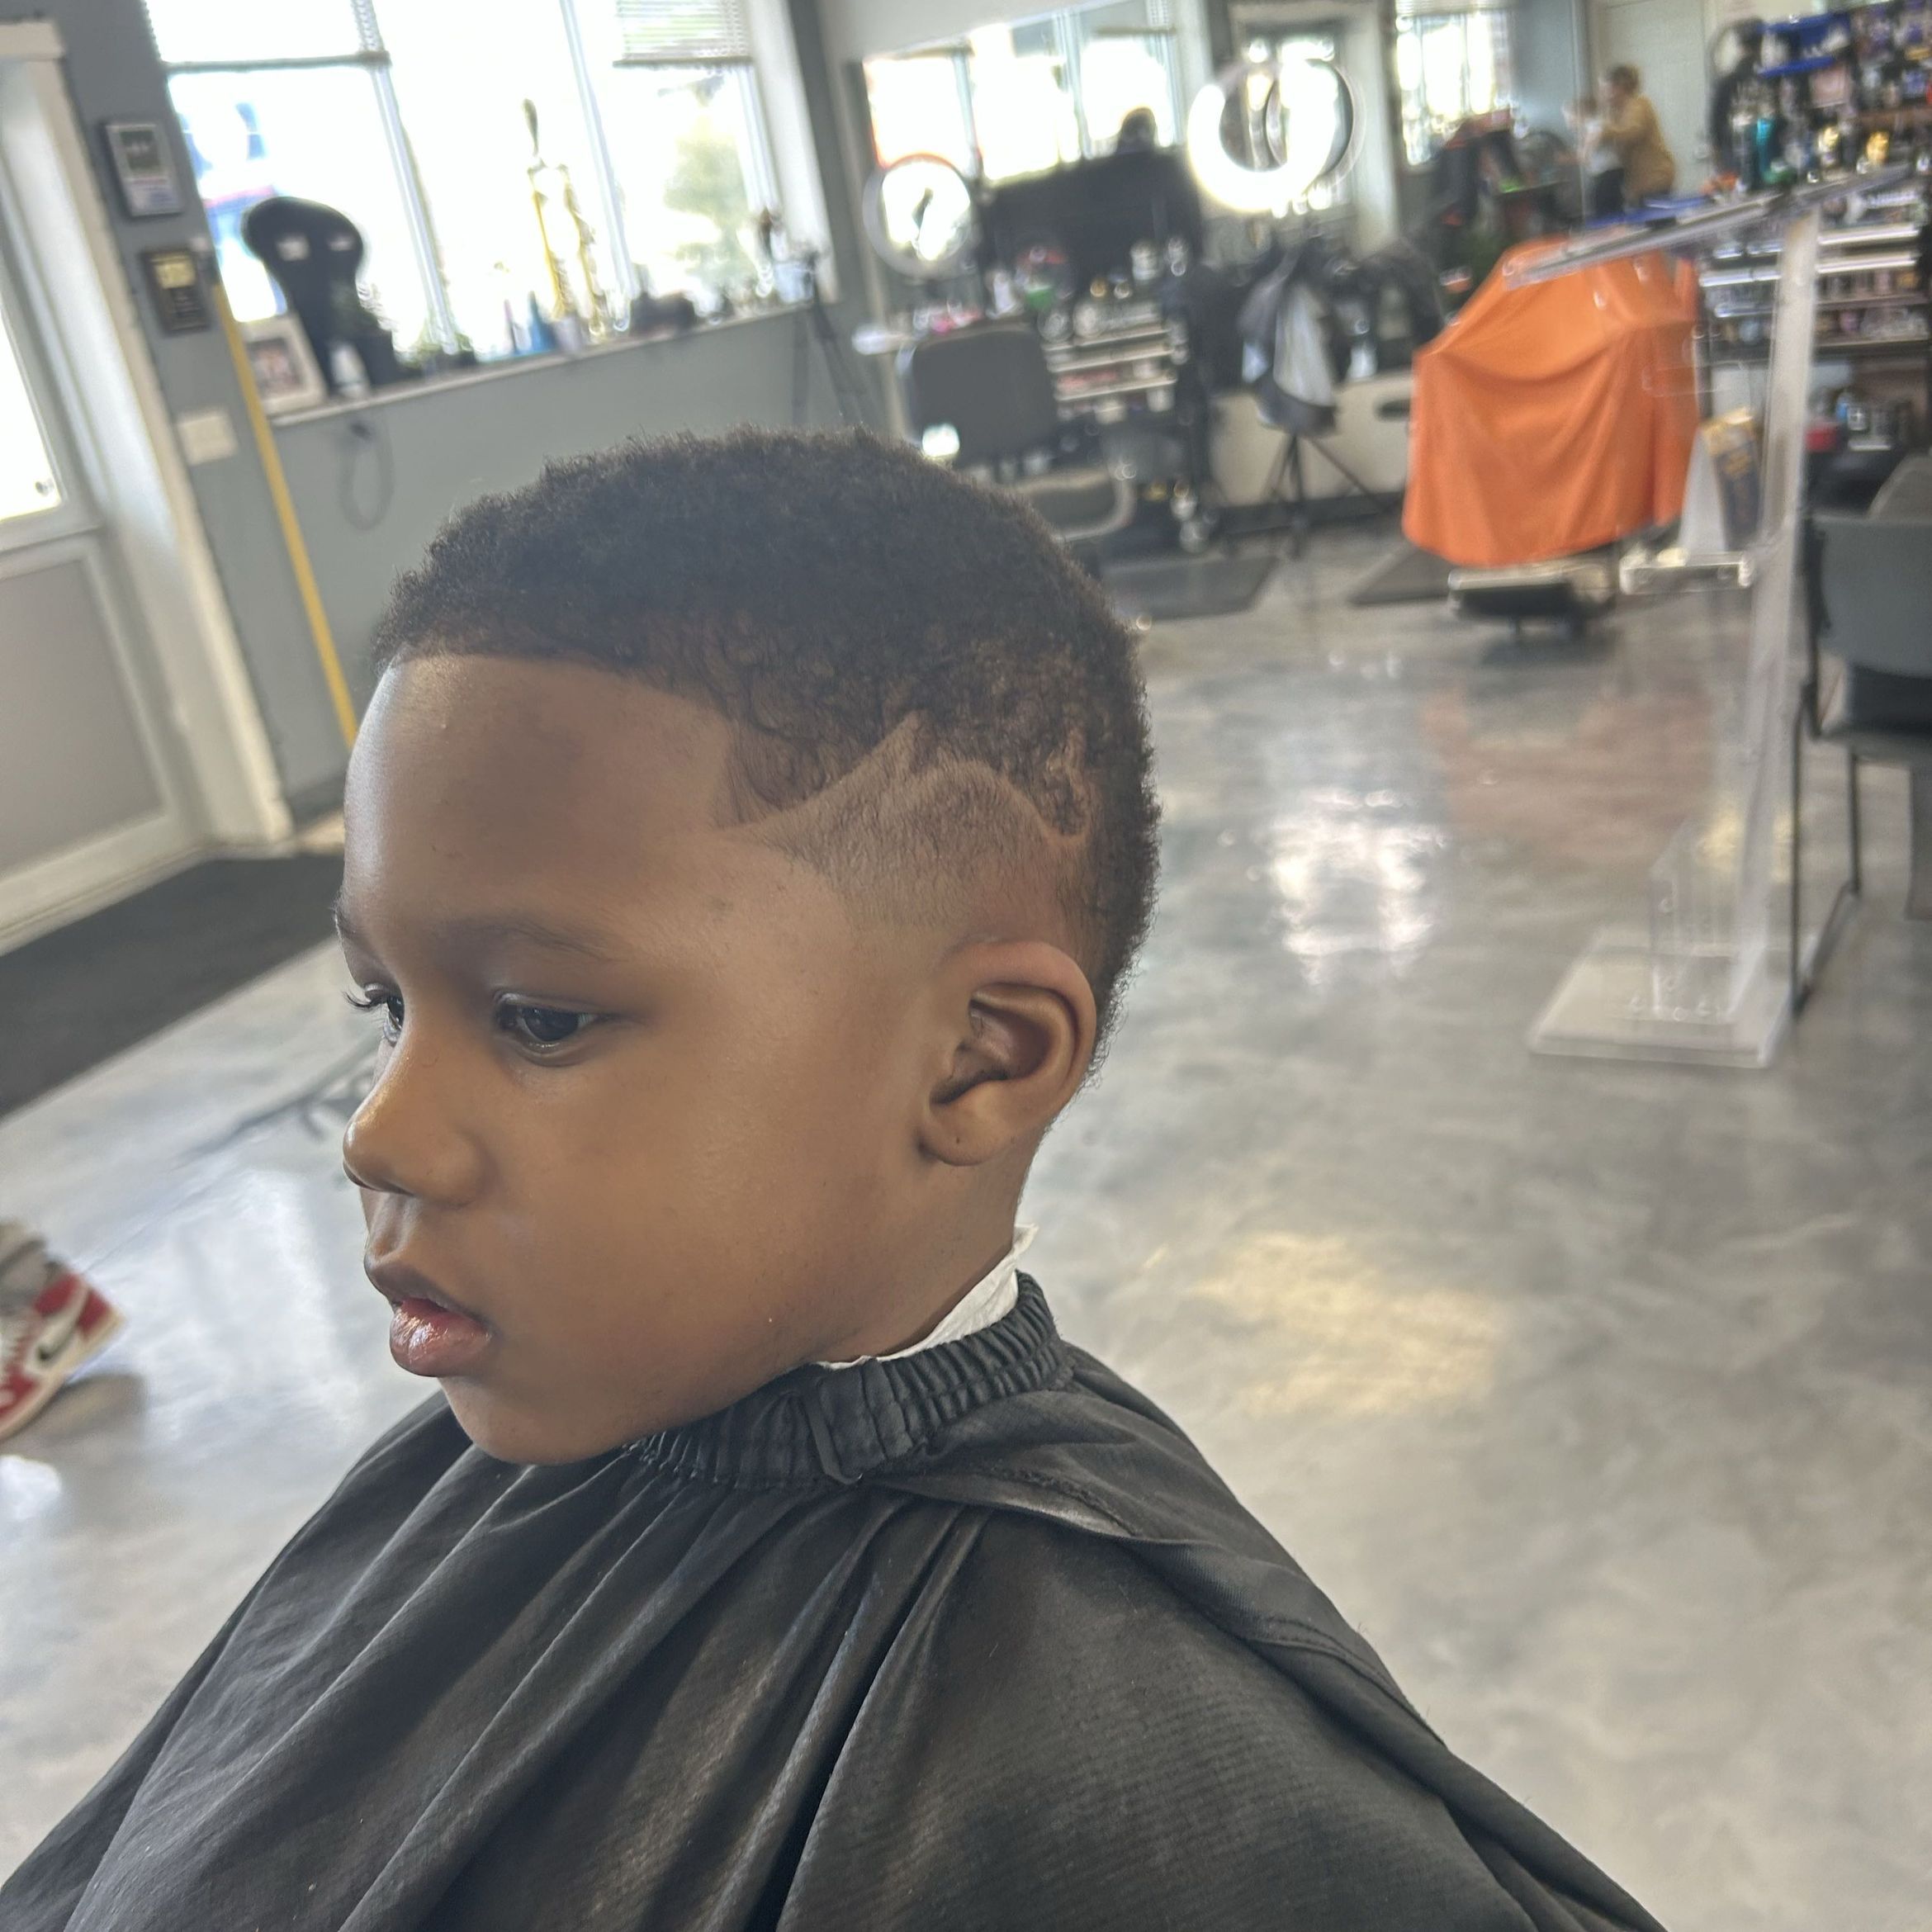 Kiddo’s Haircut Under 11 portfolio